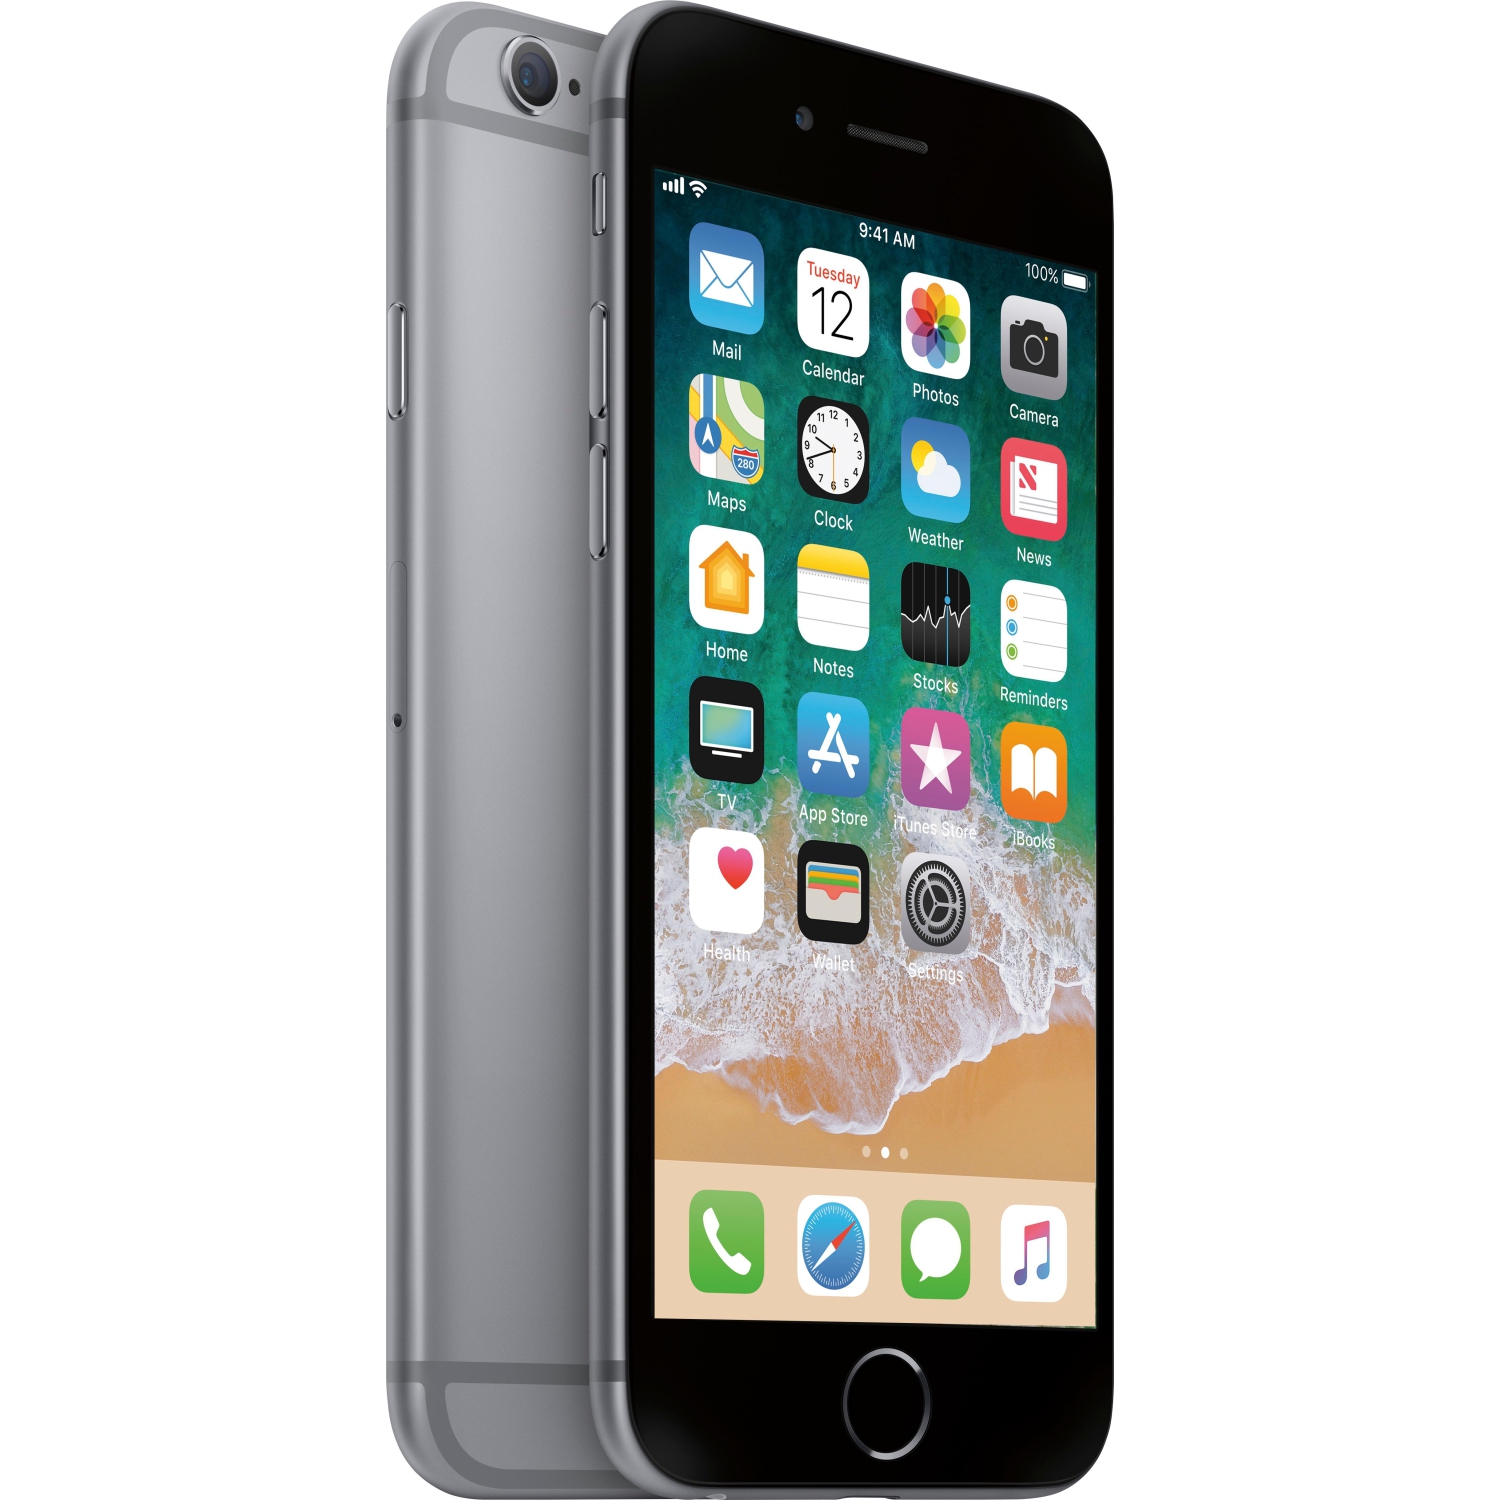 Refurbished (Good) - Apple iPhone 6s 16GB Smartphone - Space Gray - Unlocked